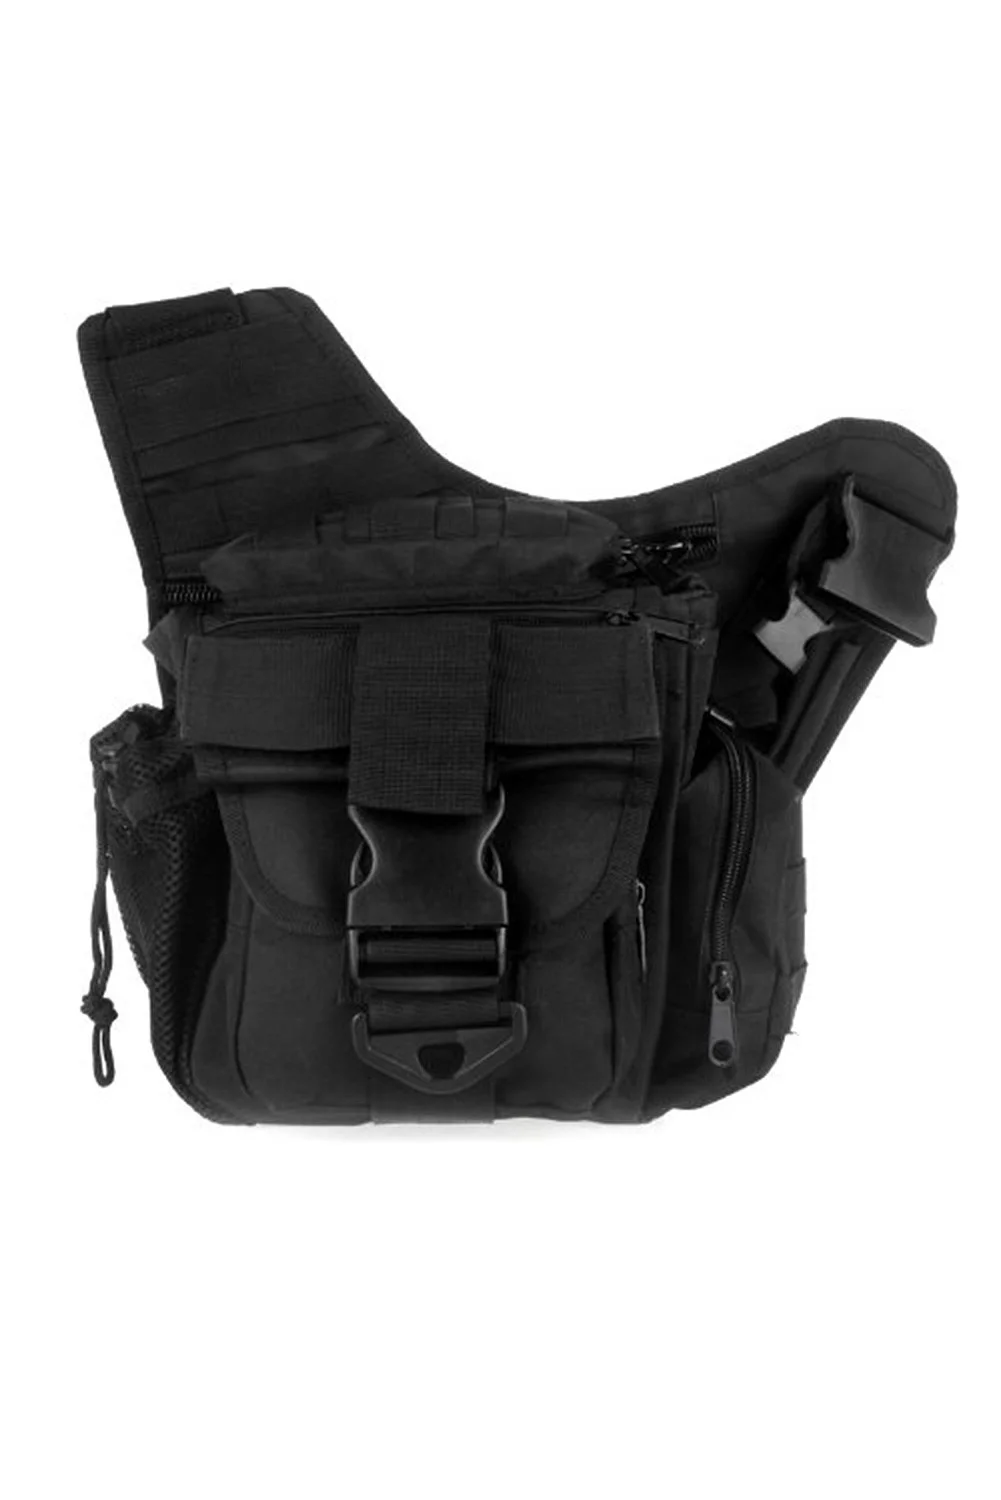 

5) TEXU 600D Nylon Molle Shoulder Strap Bag Military Push Pack Belt Pouch Travel Backpack Camera Money Utility Bag Black